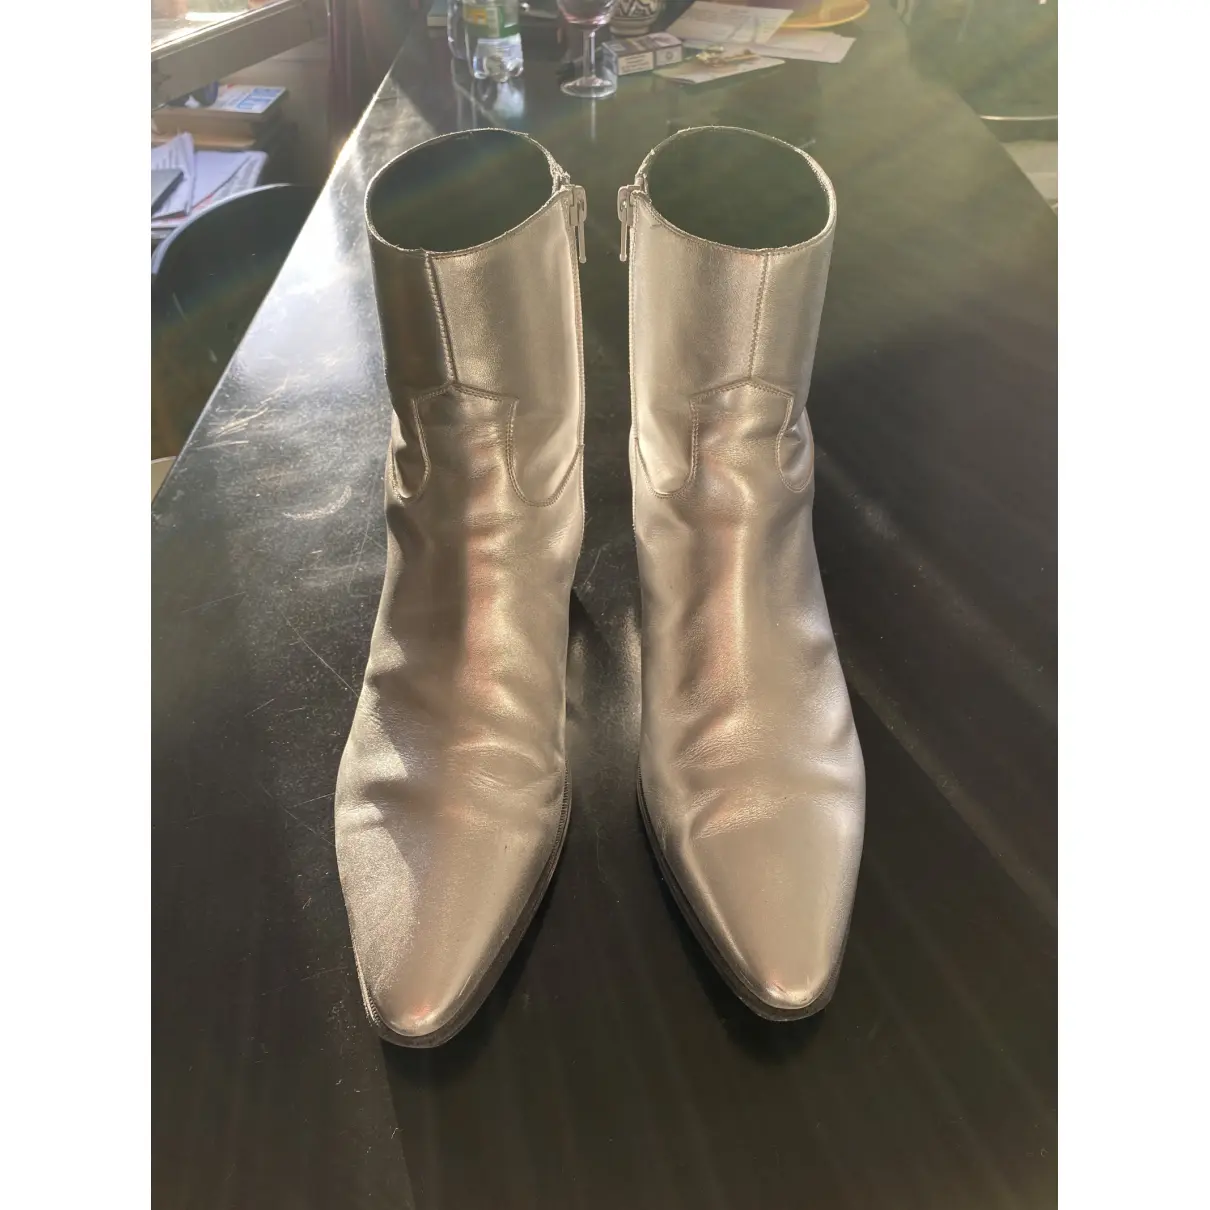 Jacno leather boots Celine